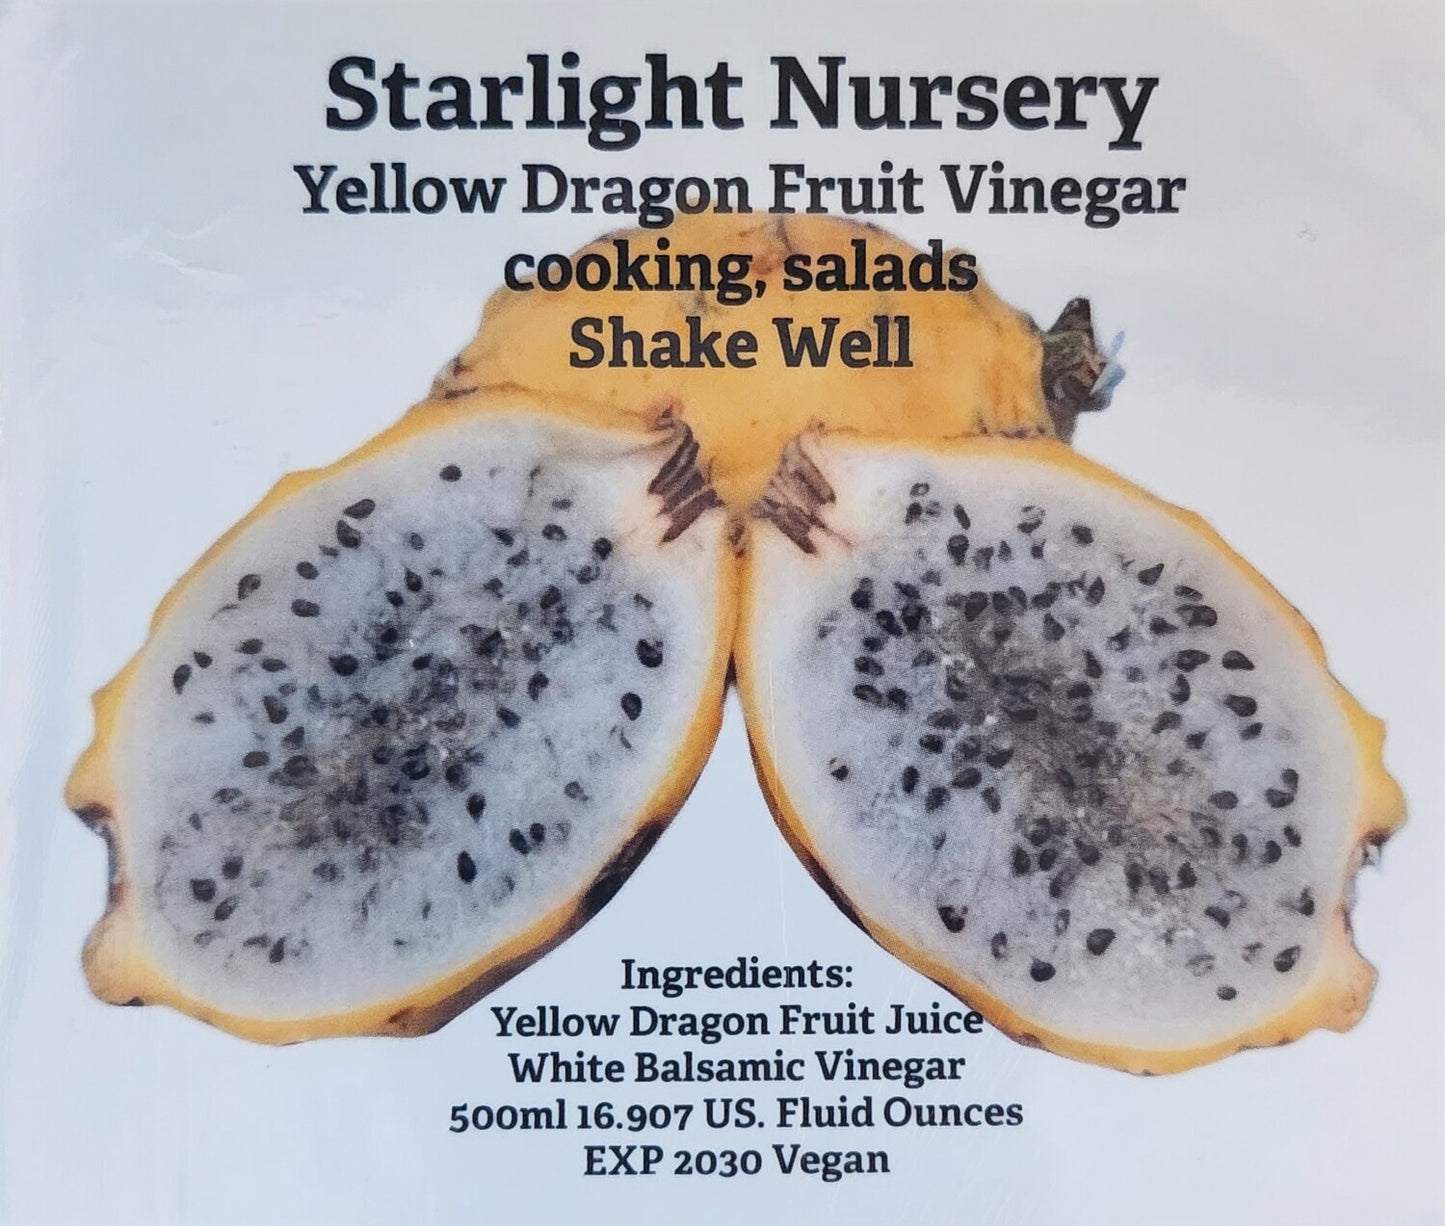 Yellow Dragon Fruit Vinegar Two Bottles Two Flavors - Starlight Nursery 